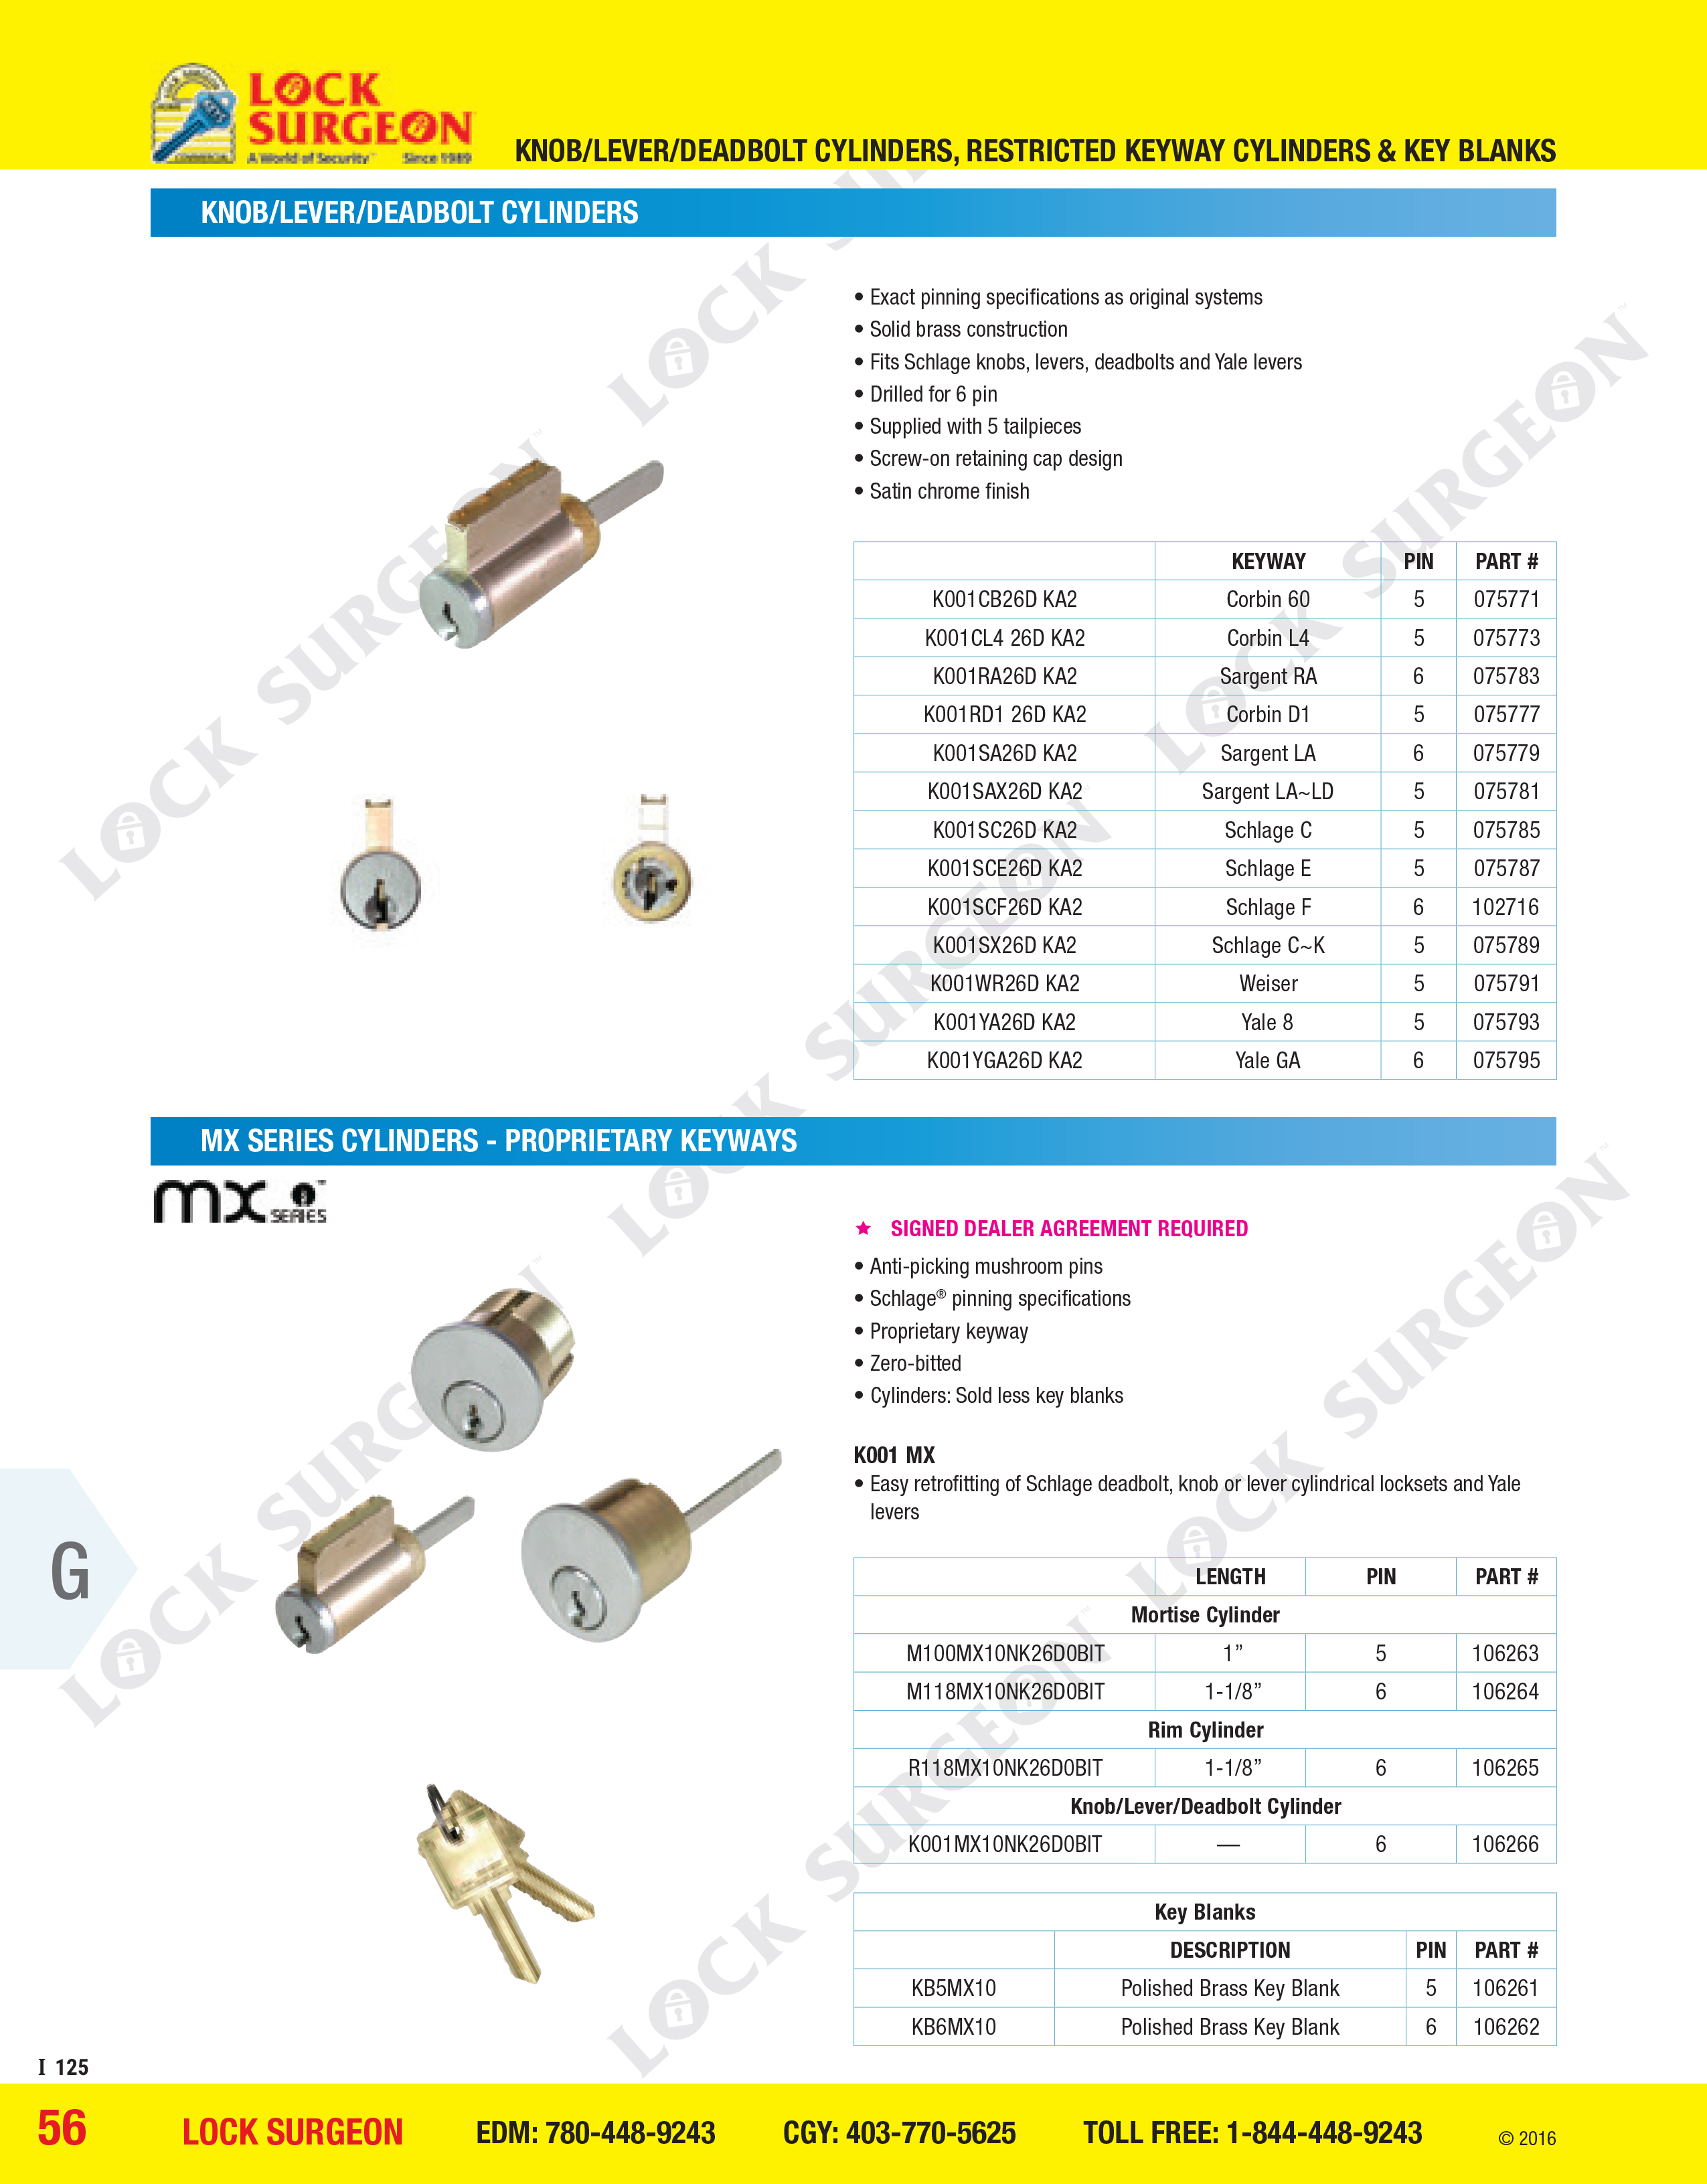 GMS knob lever deadbolt cylinders restricted keyways and key blanks.